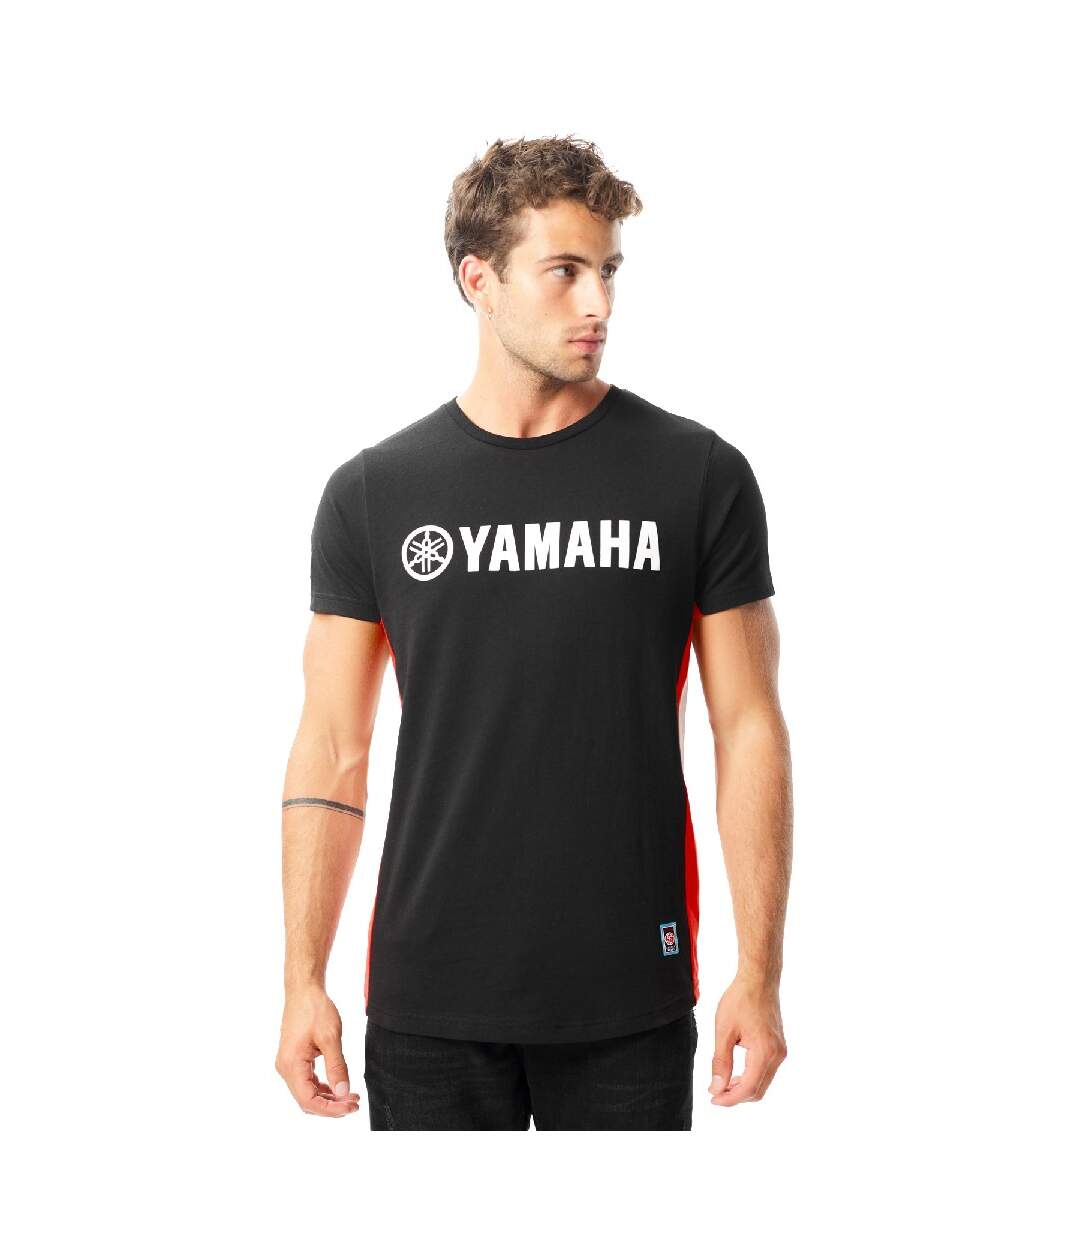 T shirt homme Racing comptatible Collection Textile Yamaha Outsiders- Assortiment modèles photos selon arrivages- T Shirt MC Side A